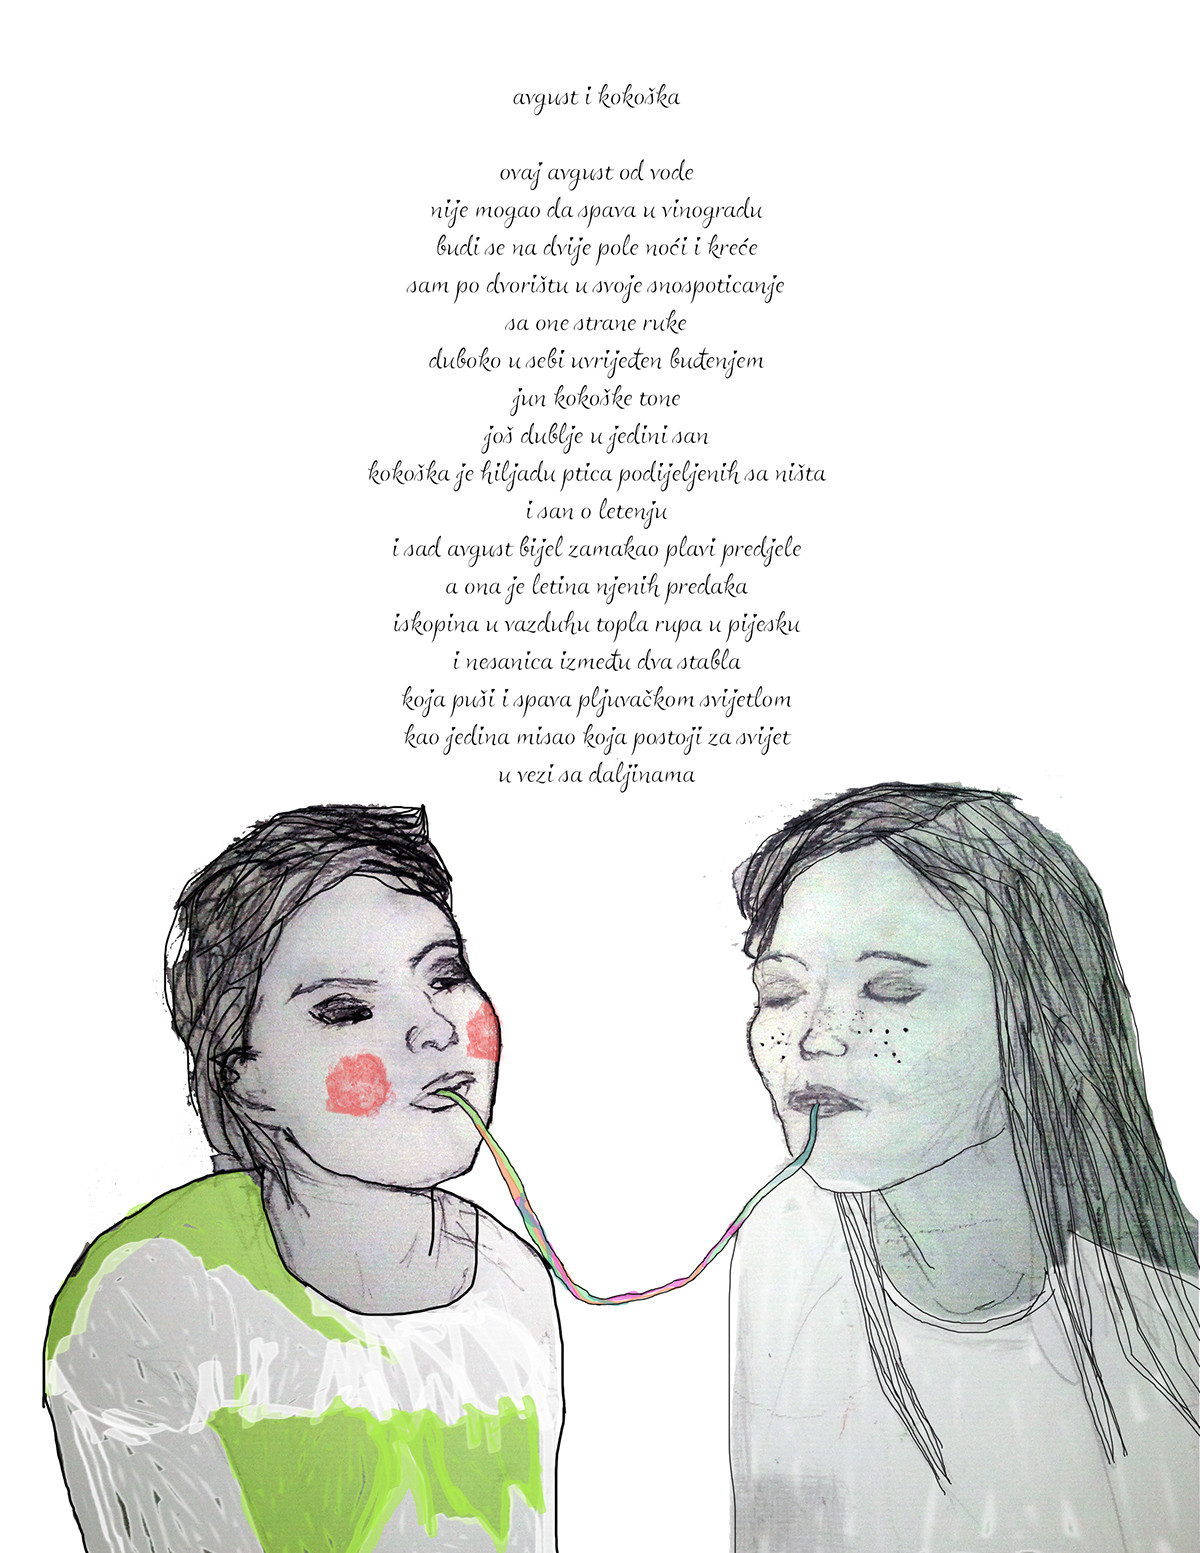 poetry illustration